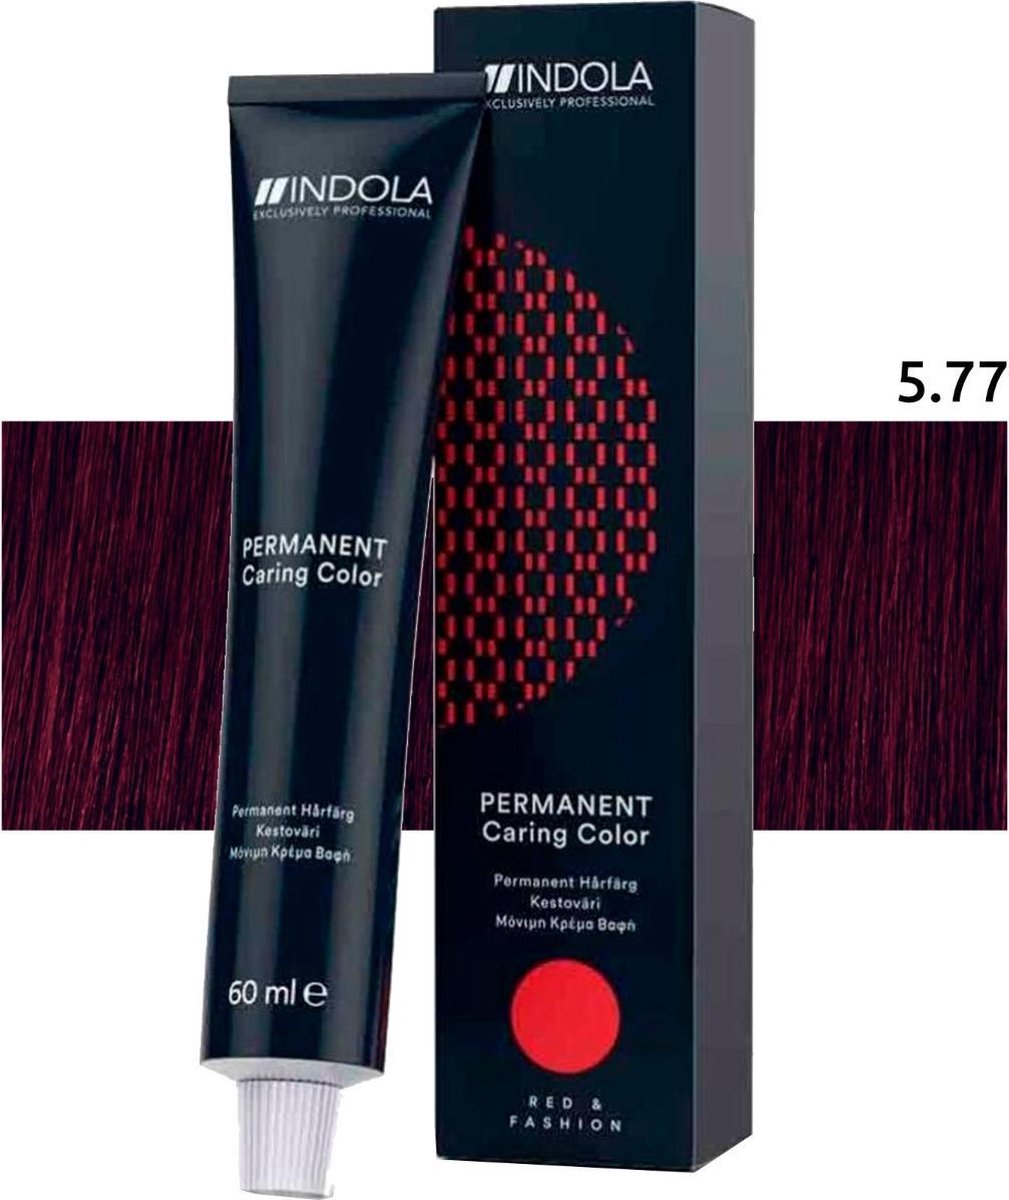 Indola - Indola Profession Permanent Caring Color 5.77x 60ml